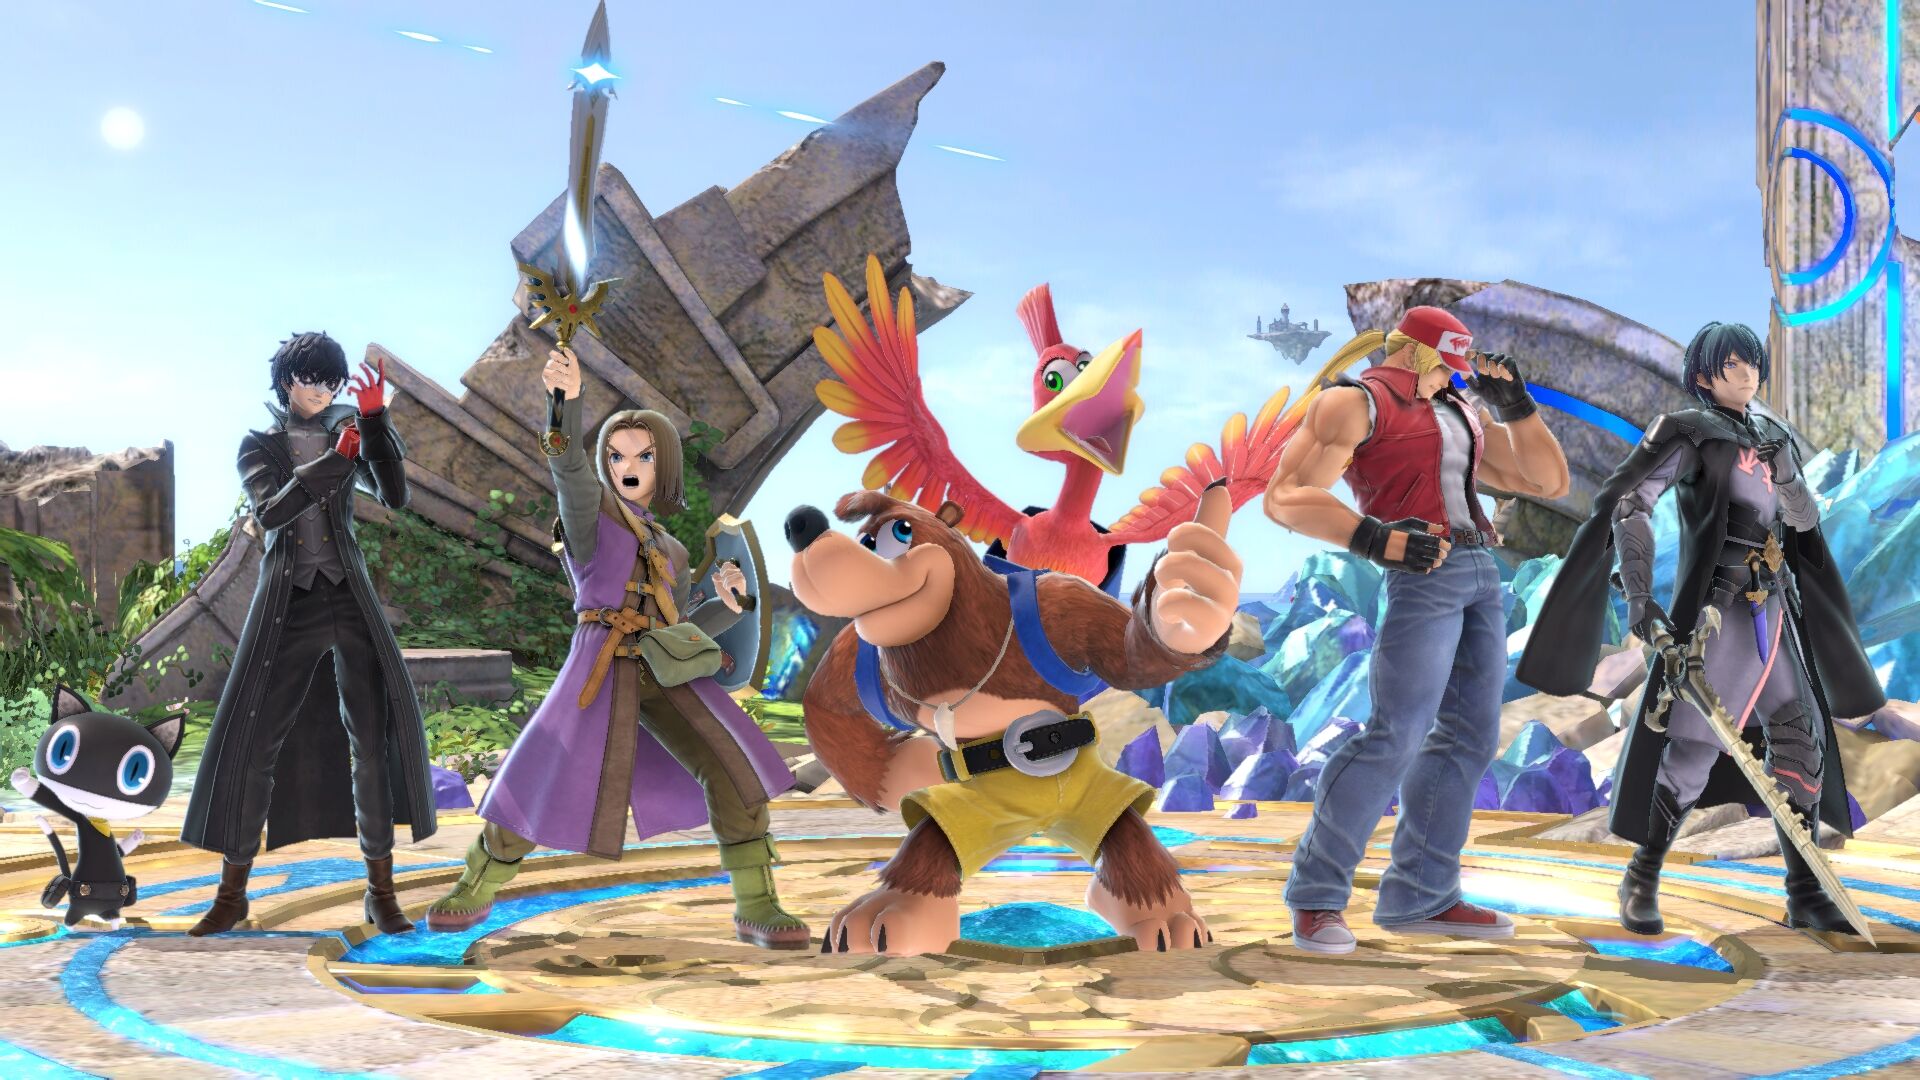 Banjo-Kazooie Joins Super Smash Bros. Ultimate As Fighter Pass DLC